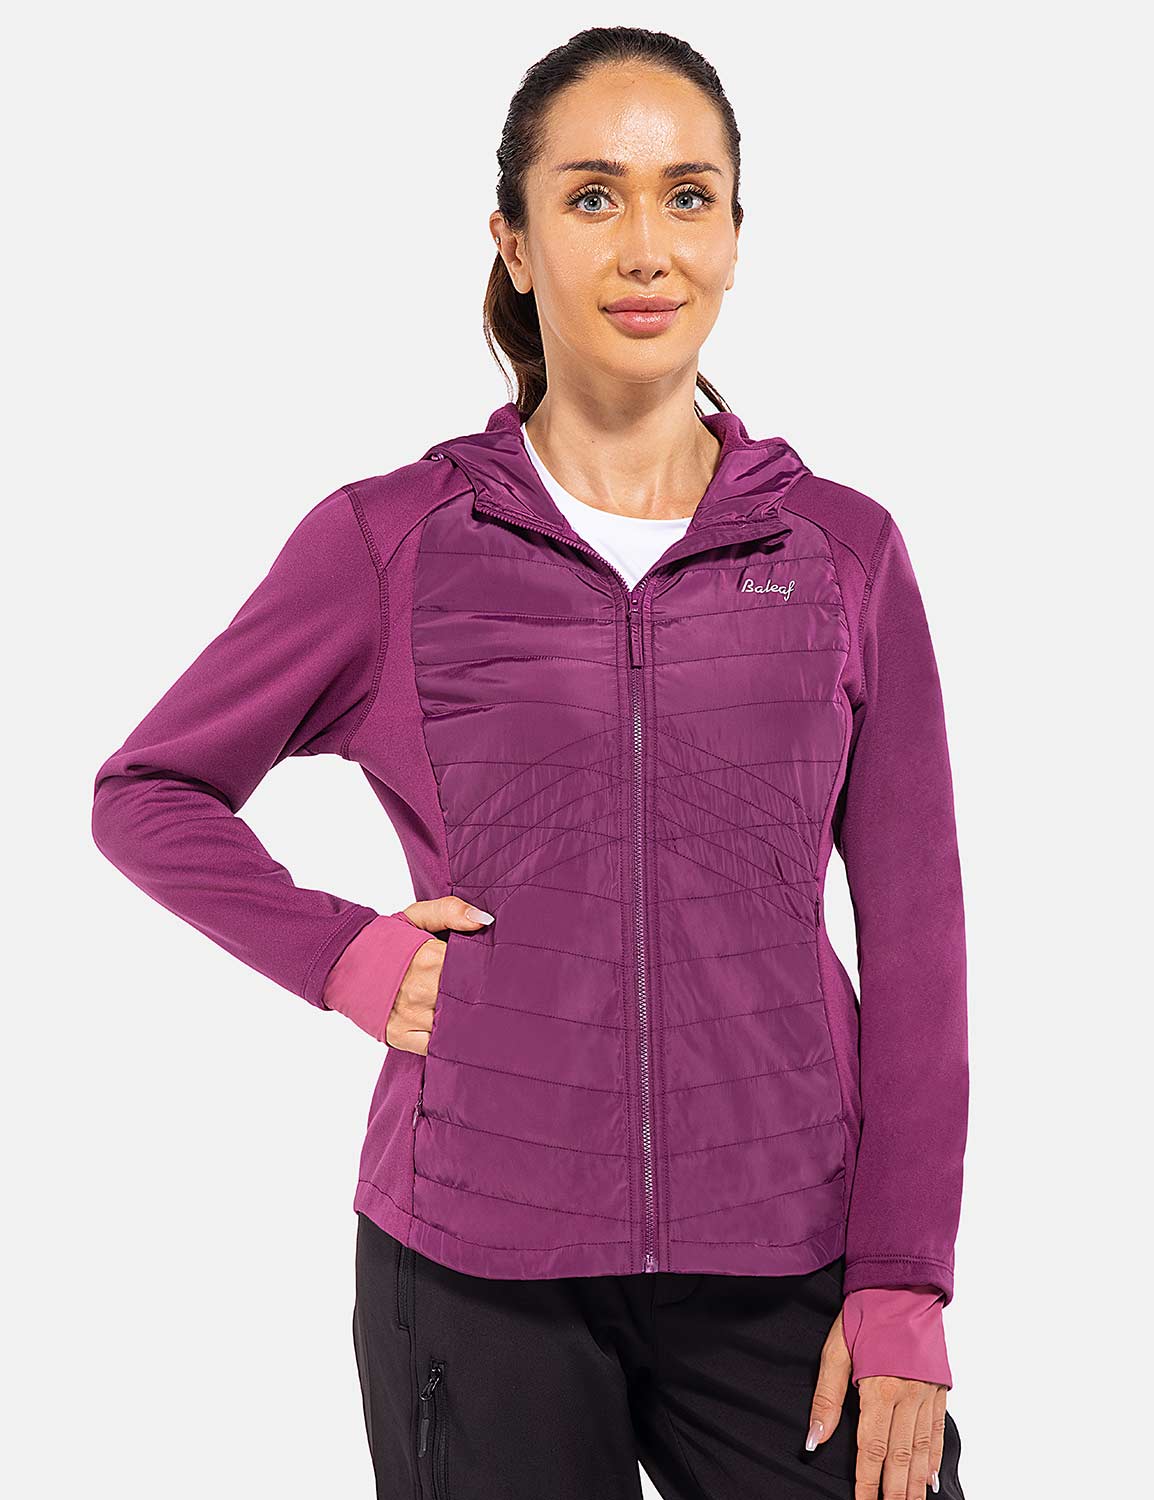  BALEAF Women's Insulated Running Puffer Jackets Hybrid